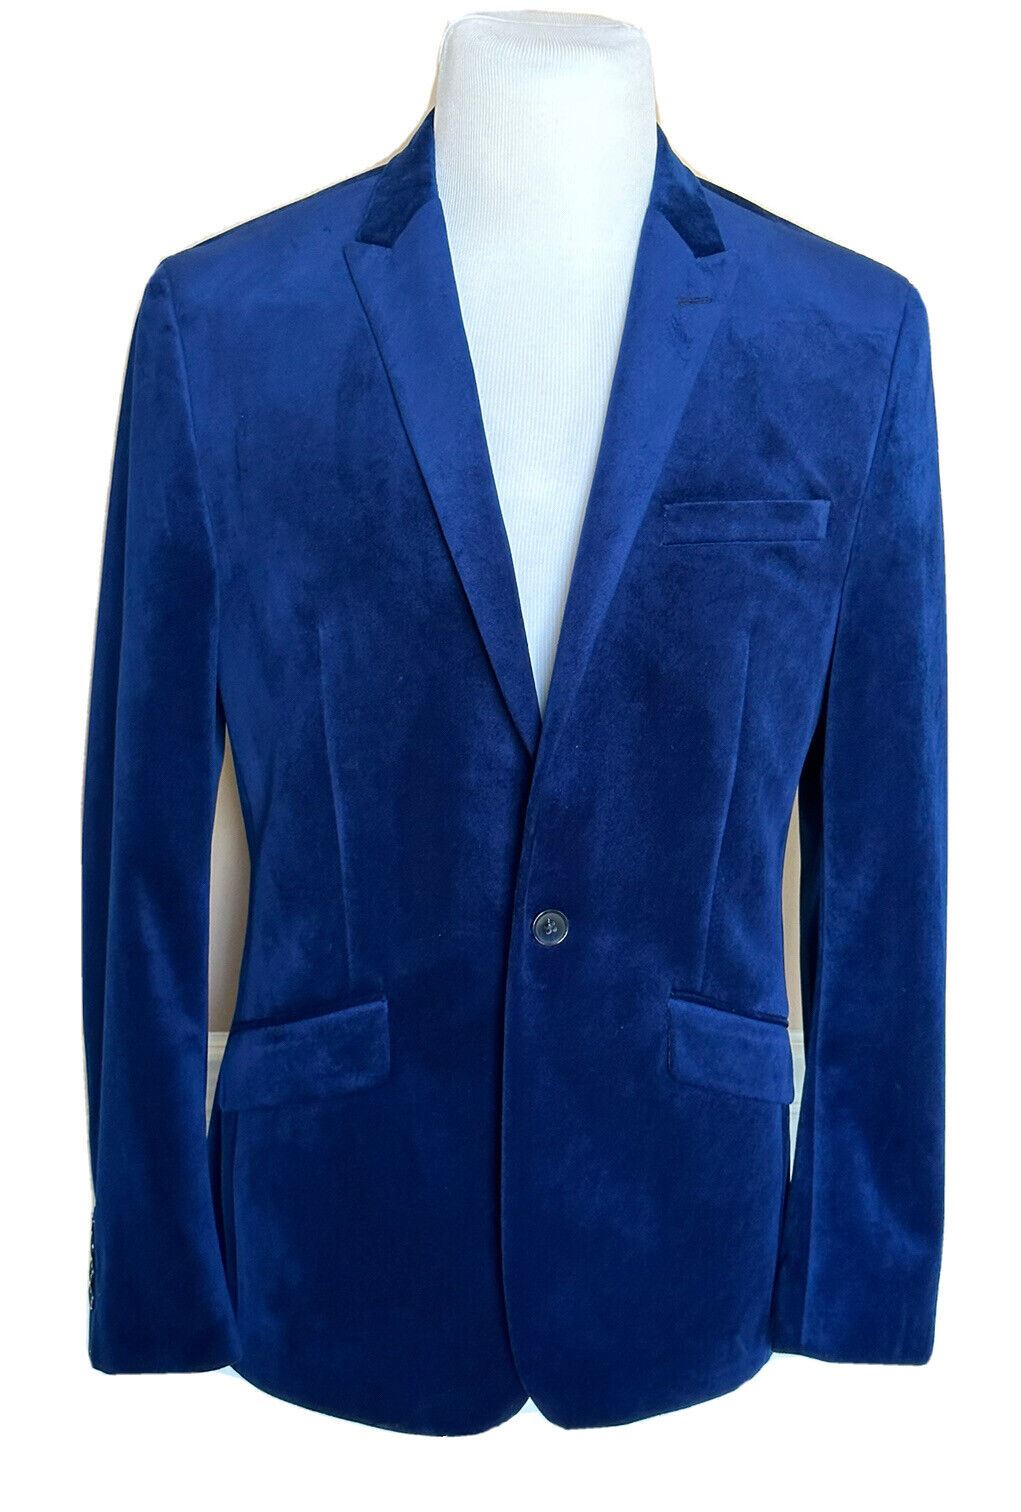 Bar III Men's Velvet Sport Coat Jacket Blue Size 40 US (50 Euro)